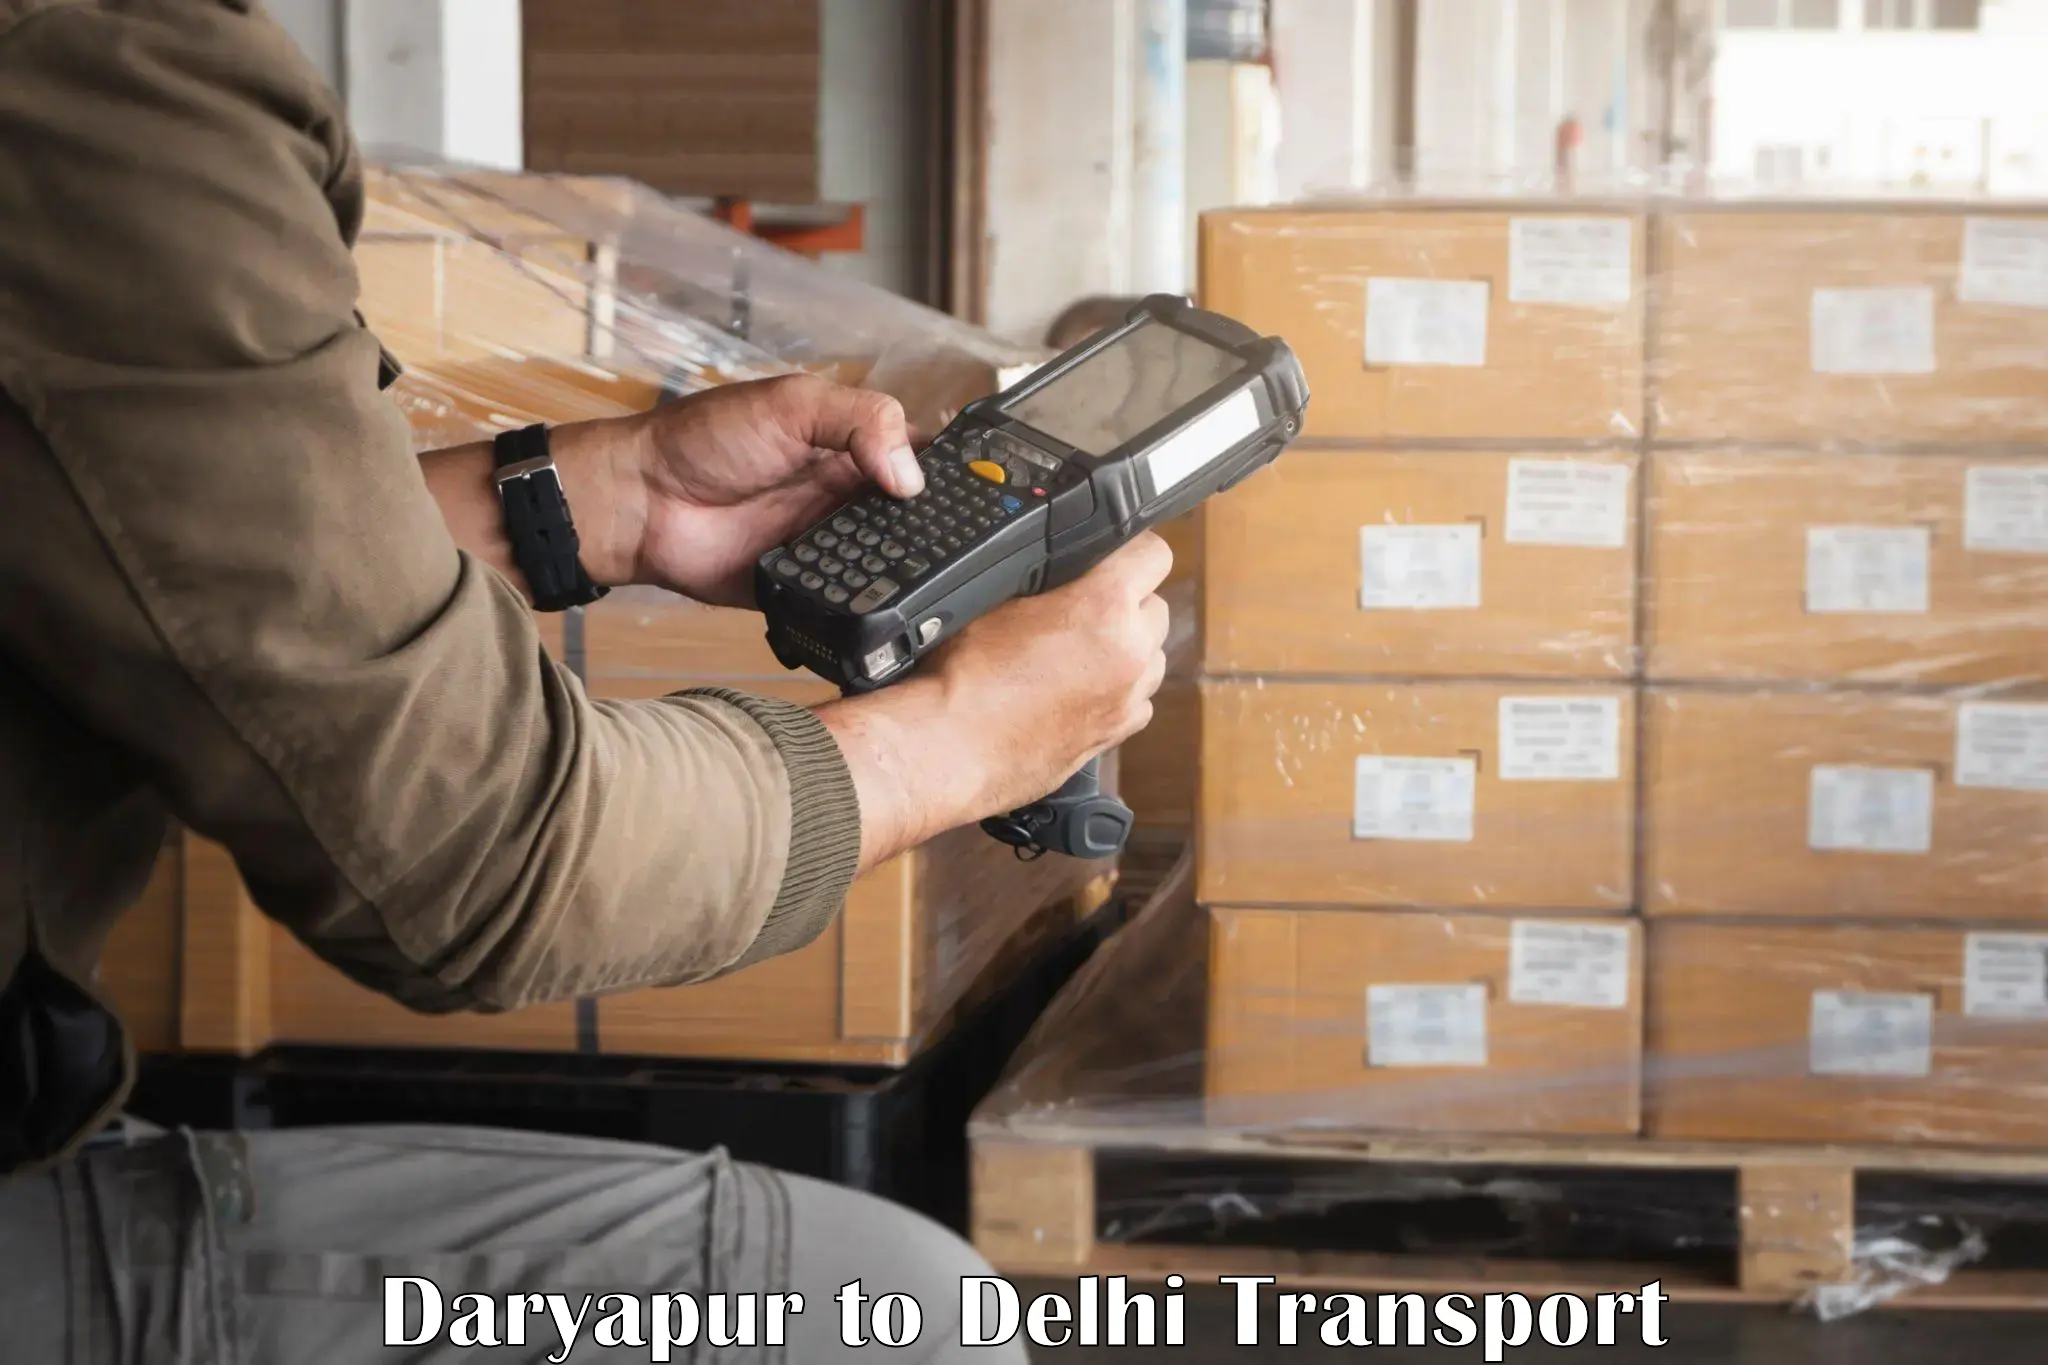 Delivery service Daryapur to Sarojini Nagar